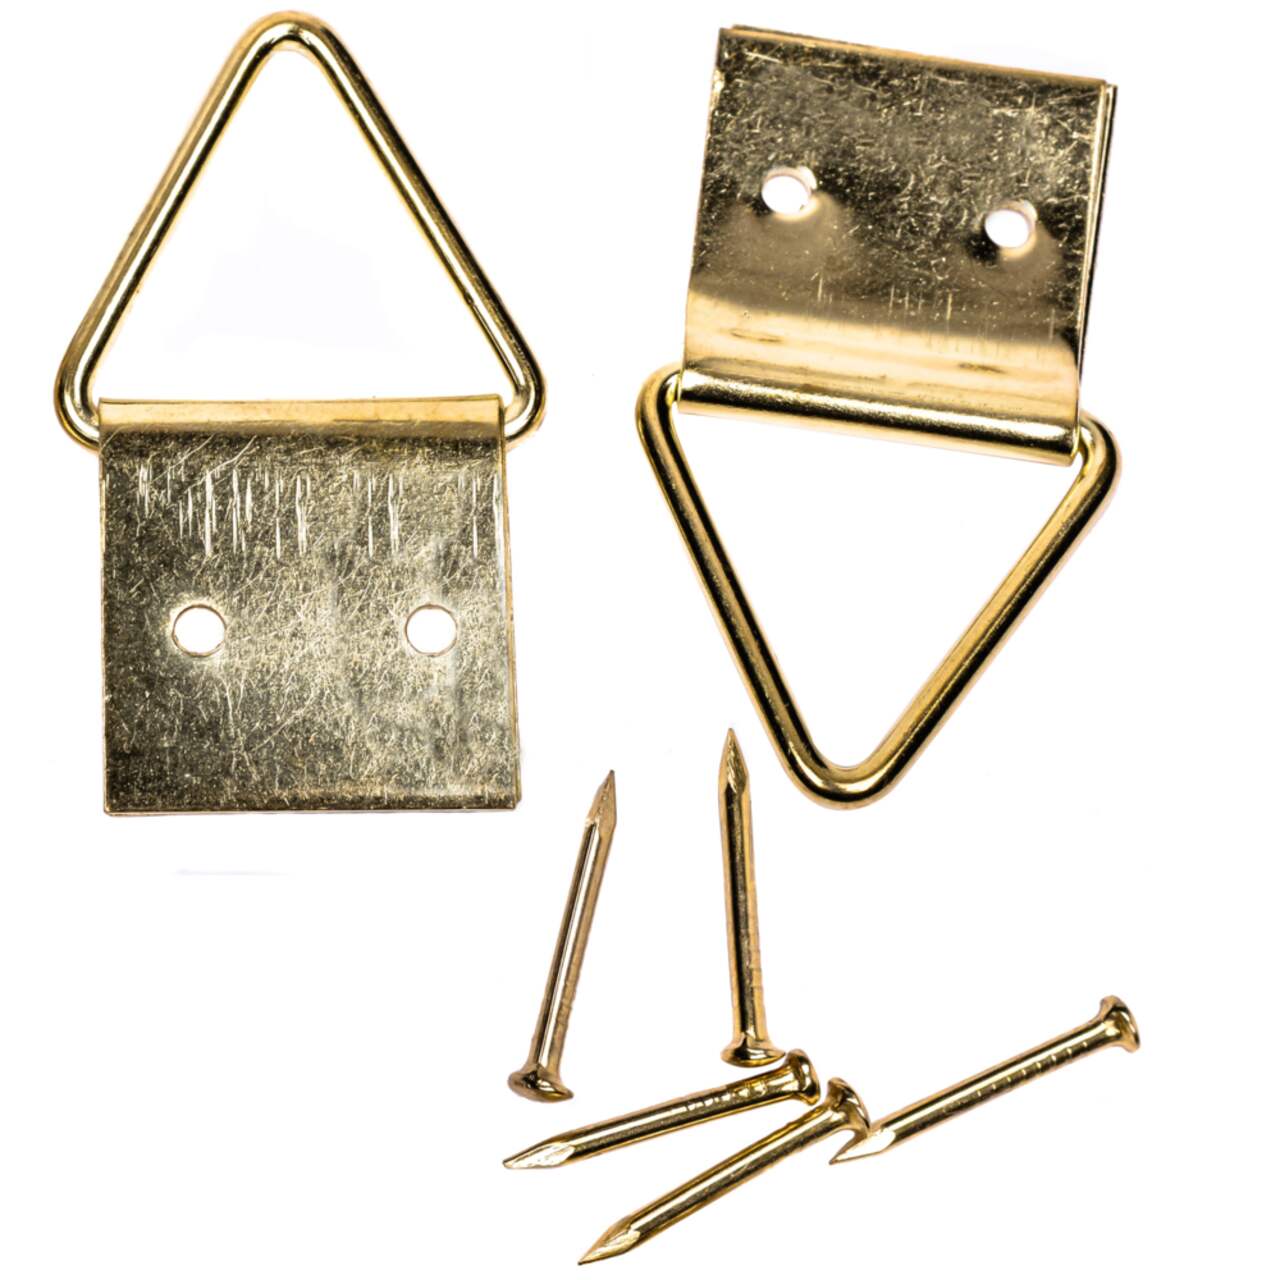 OOK Medium Brass Triangle Hangers - 2pcs